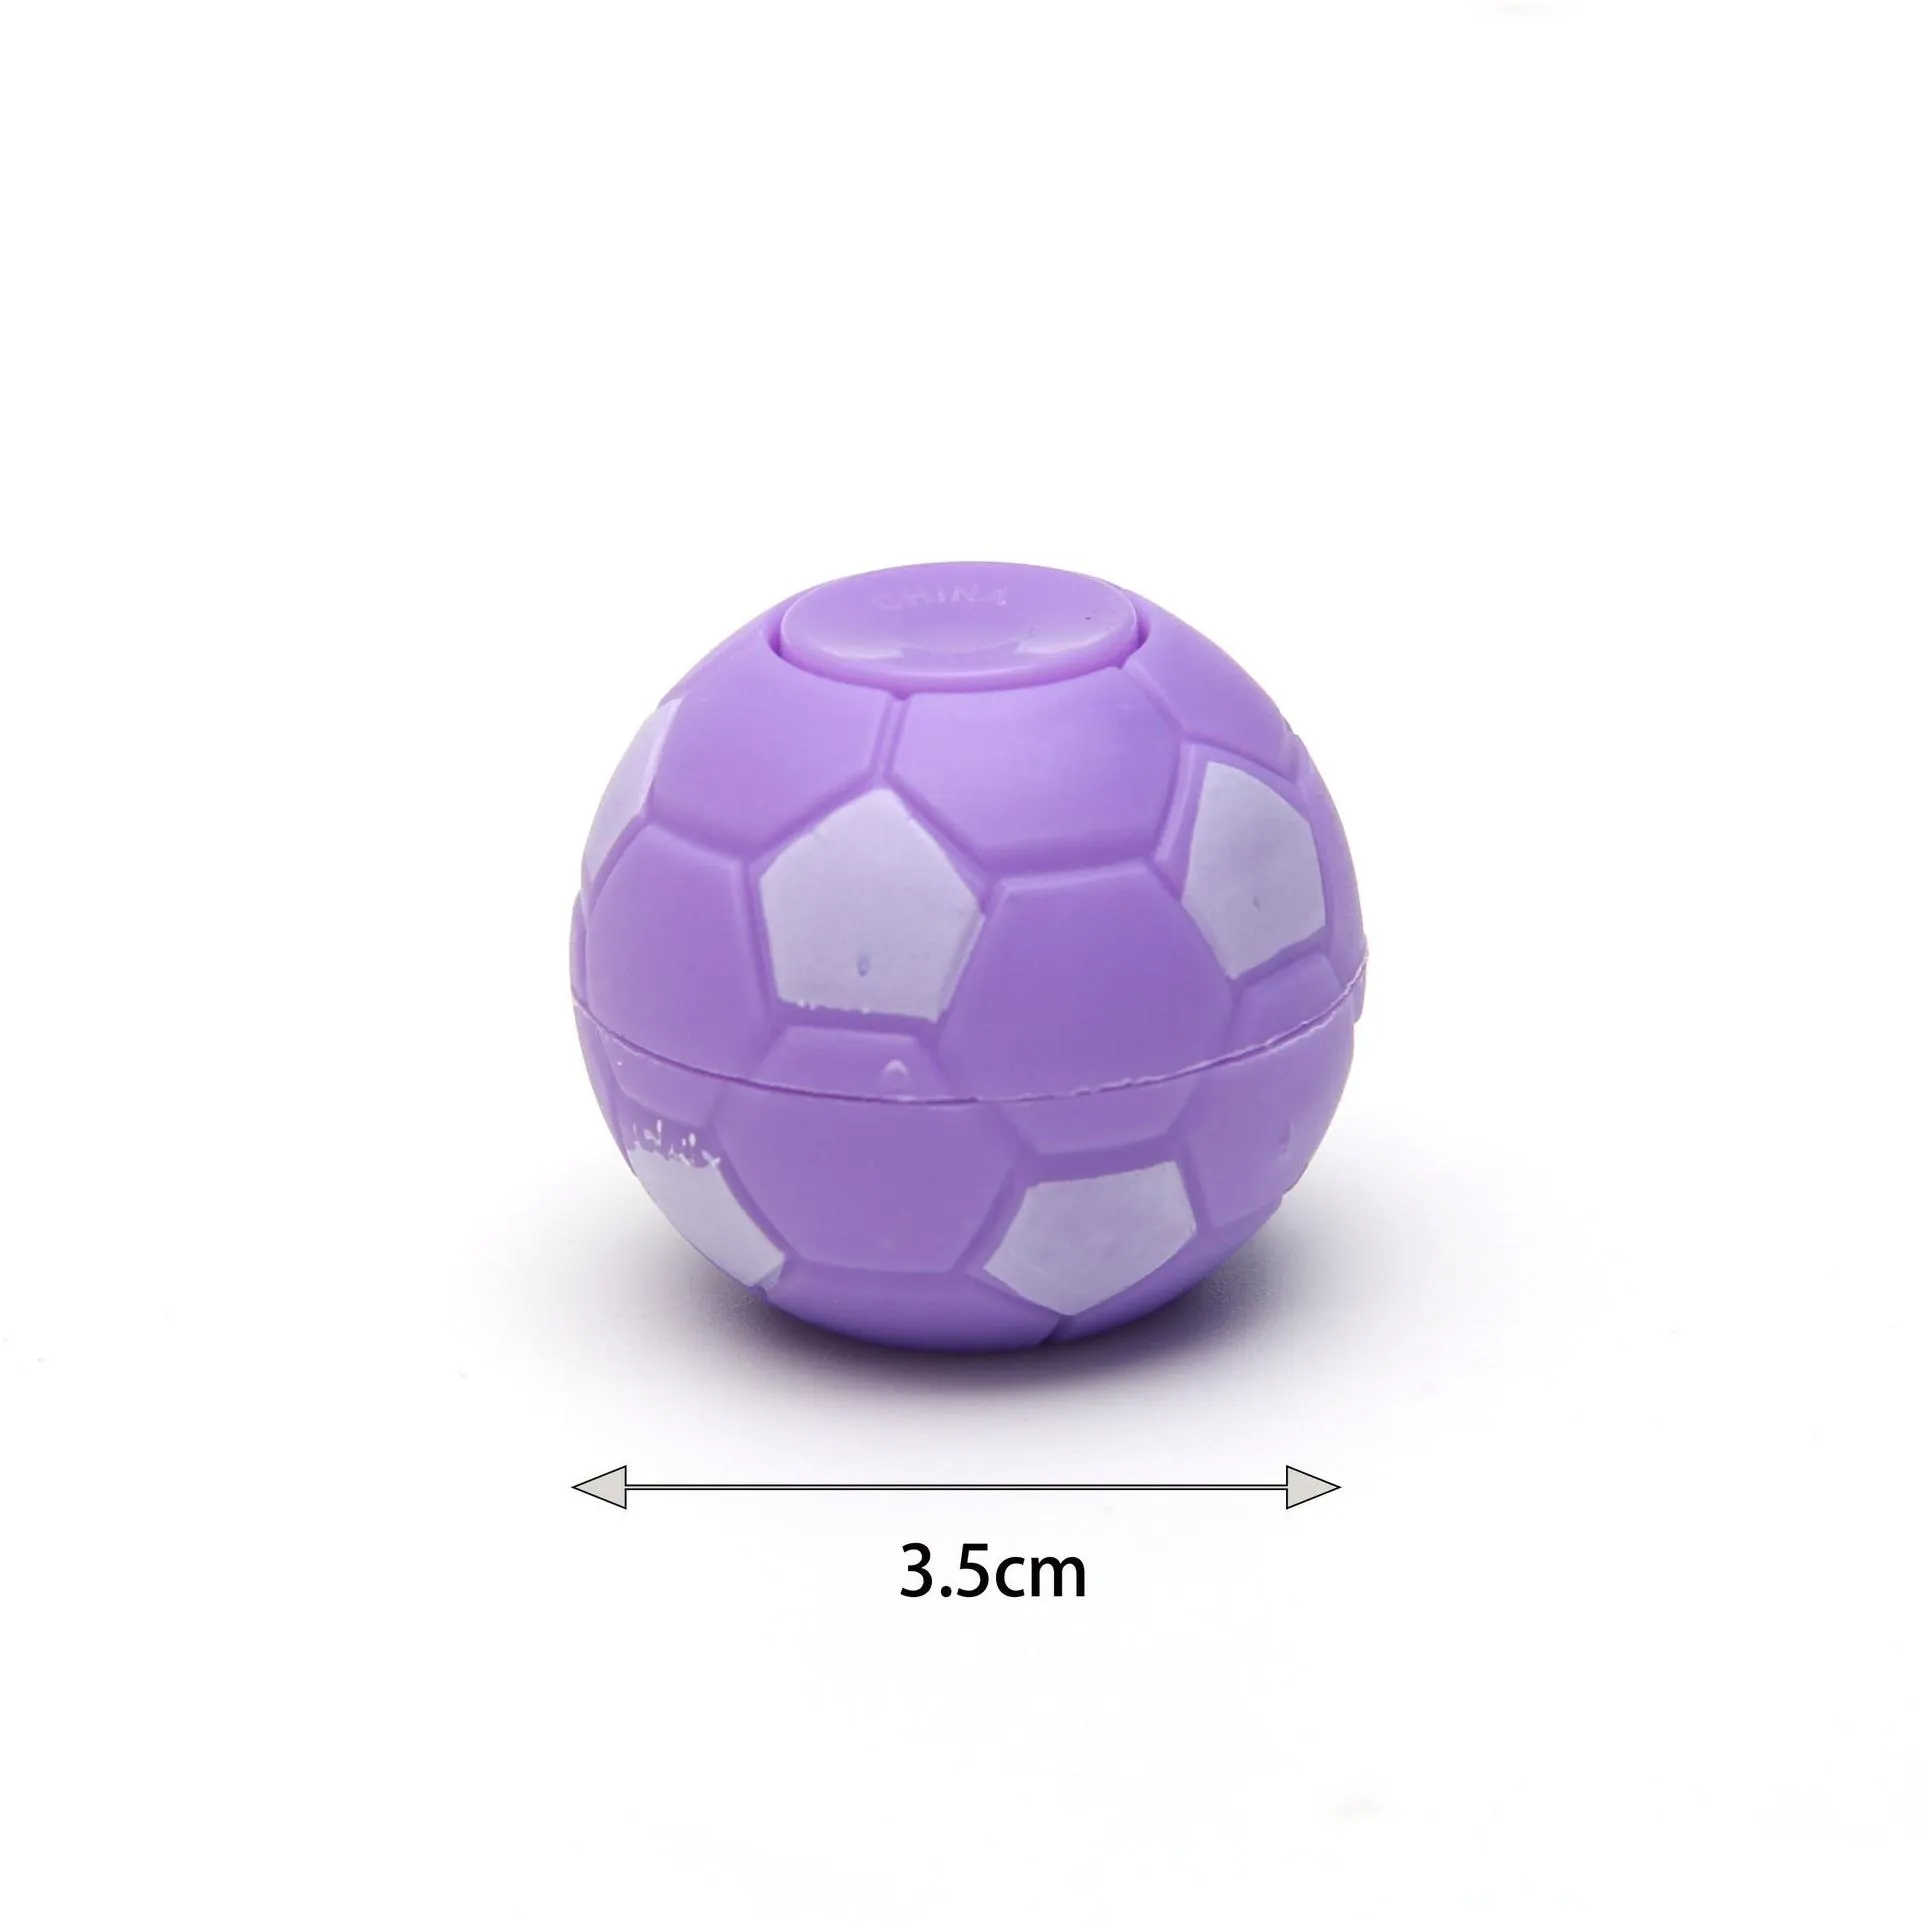 decompression soccer toys mini sport fidget balls fingertip world cup football sensory finger stress relief rotating spinner